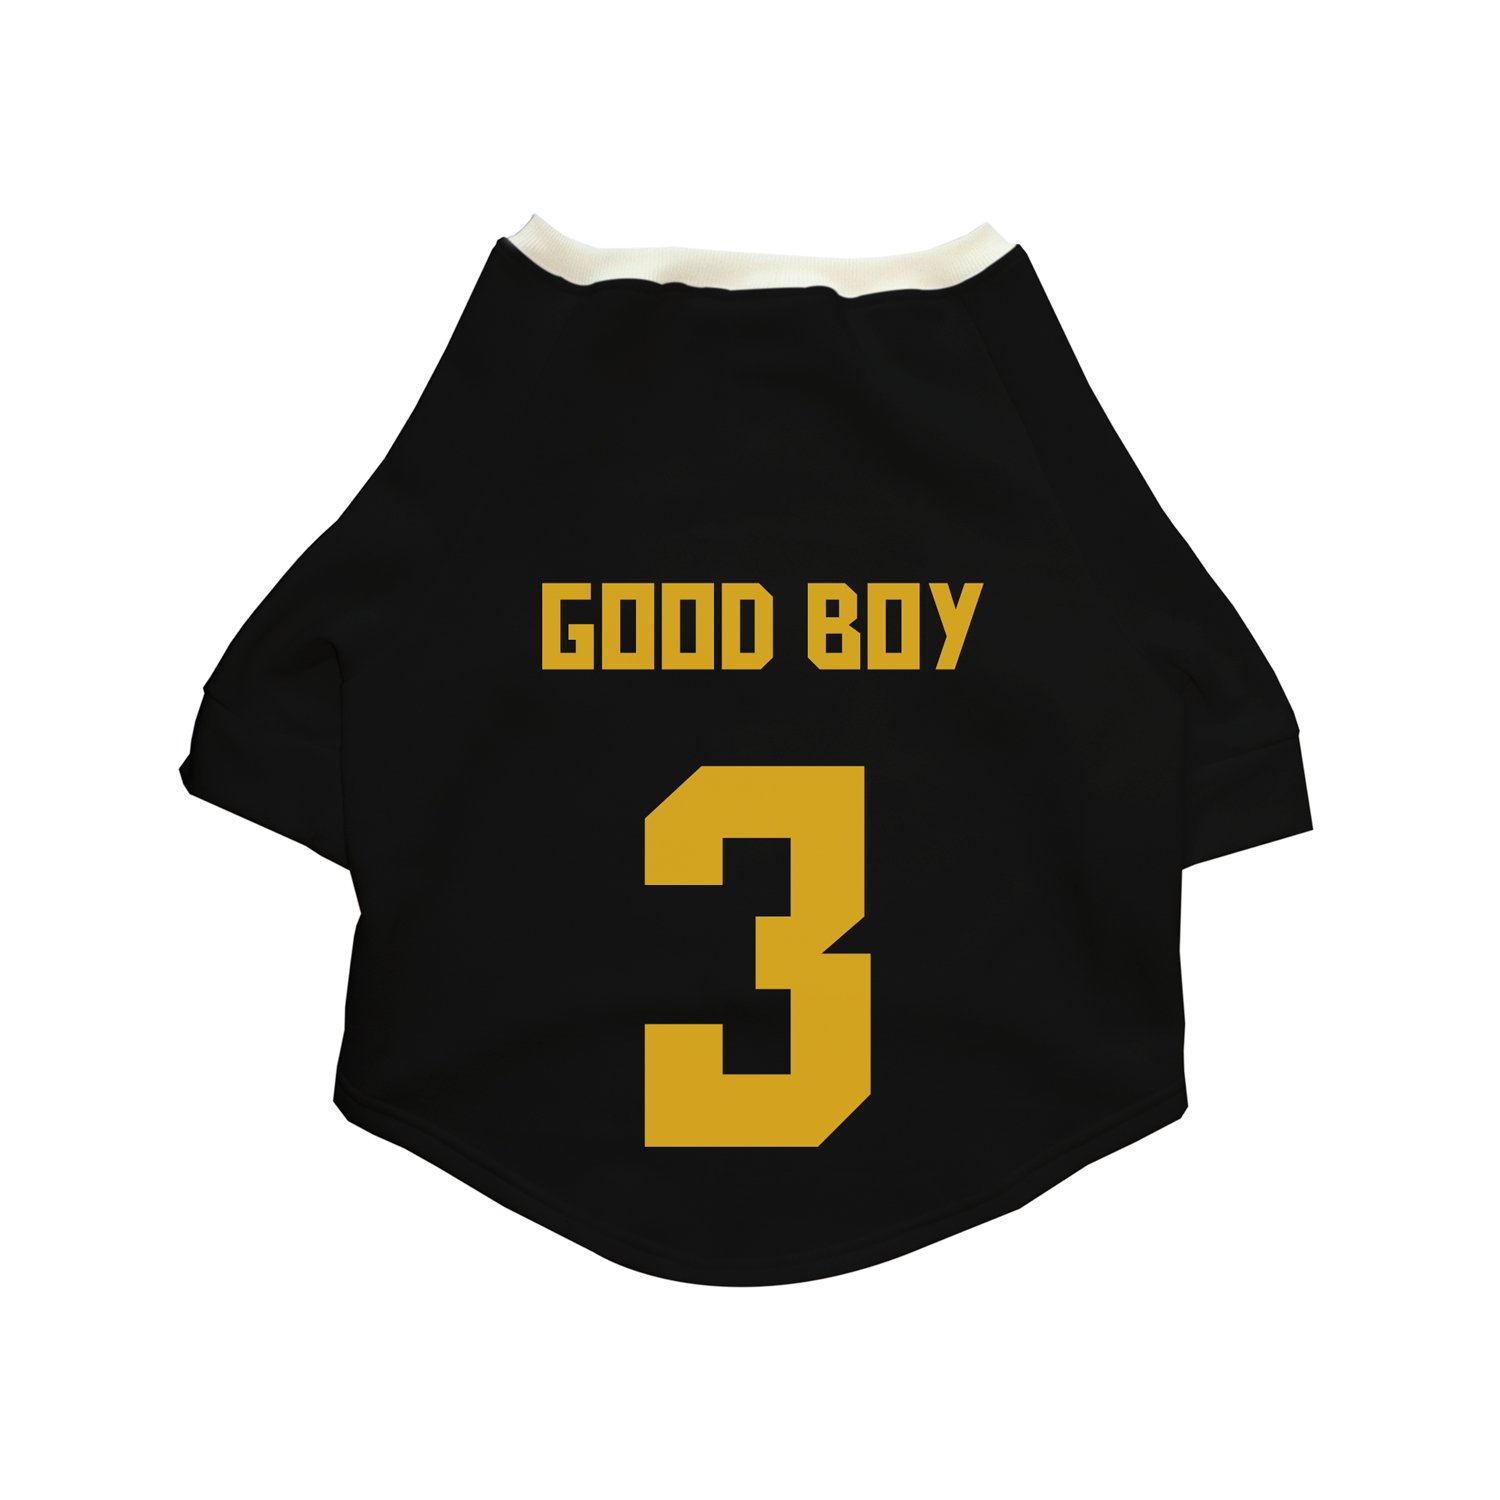 Ruse "Good Boy Number - 3" Dog Technical Jacket